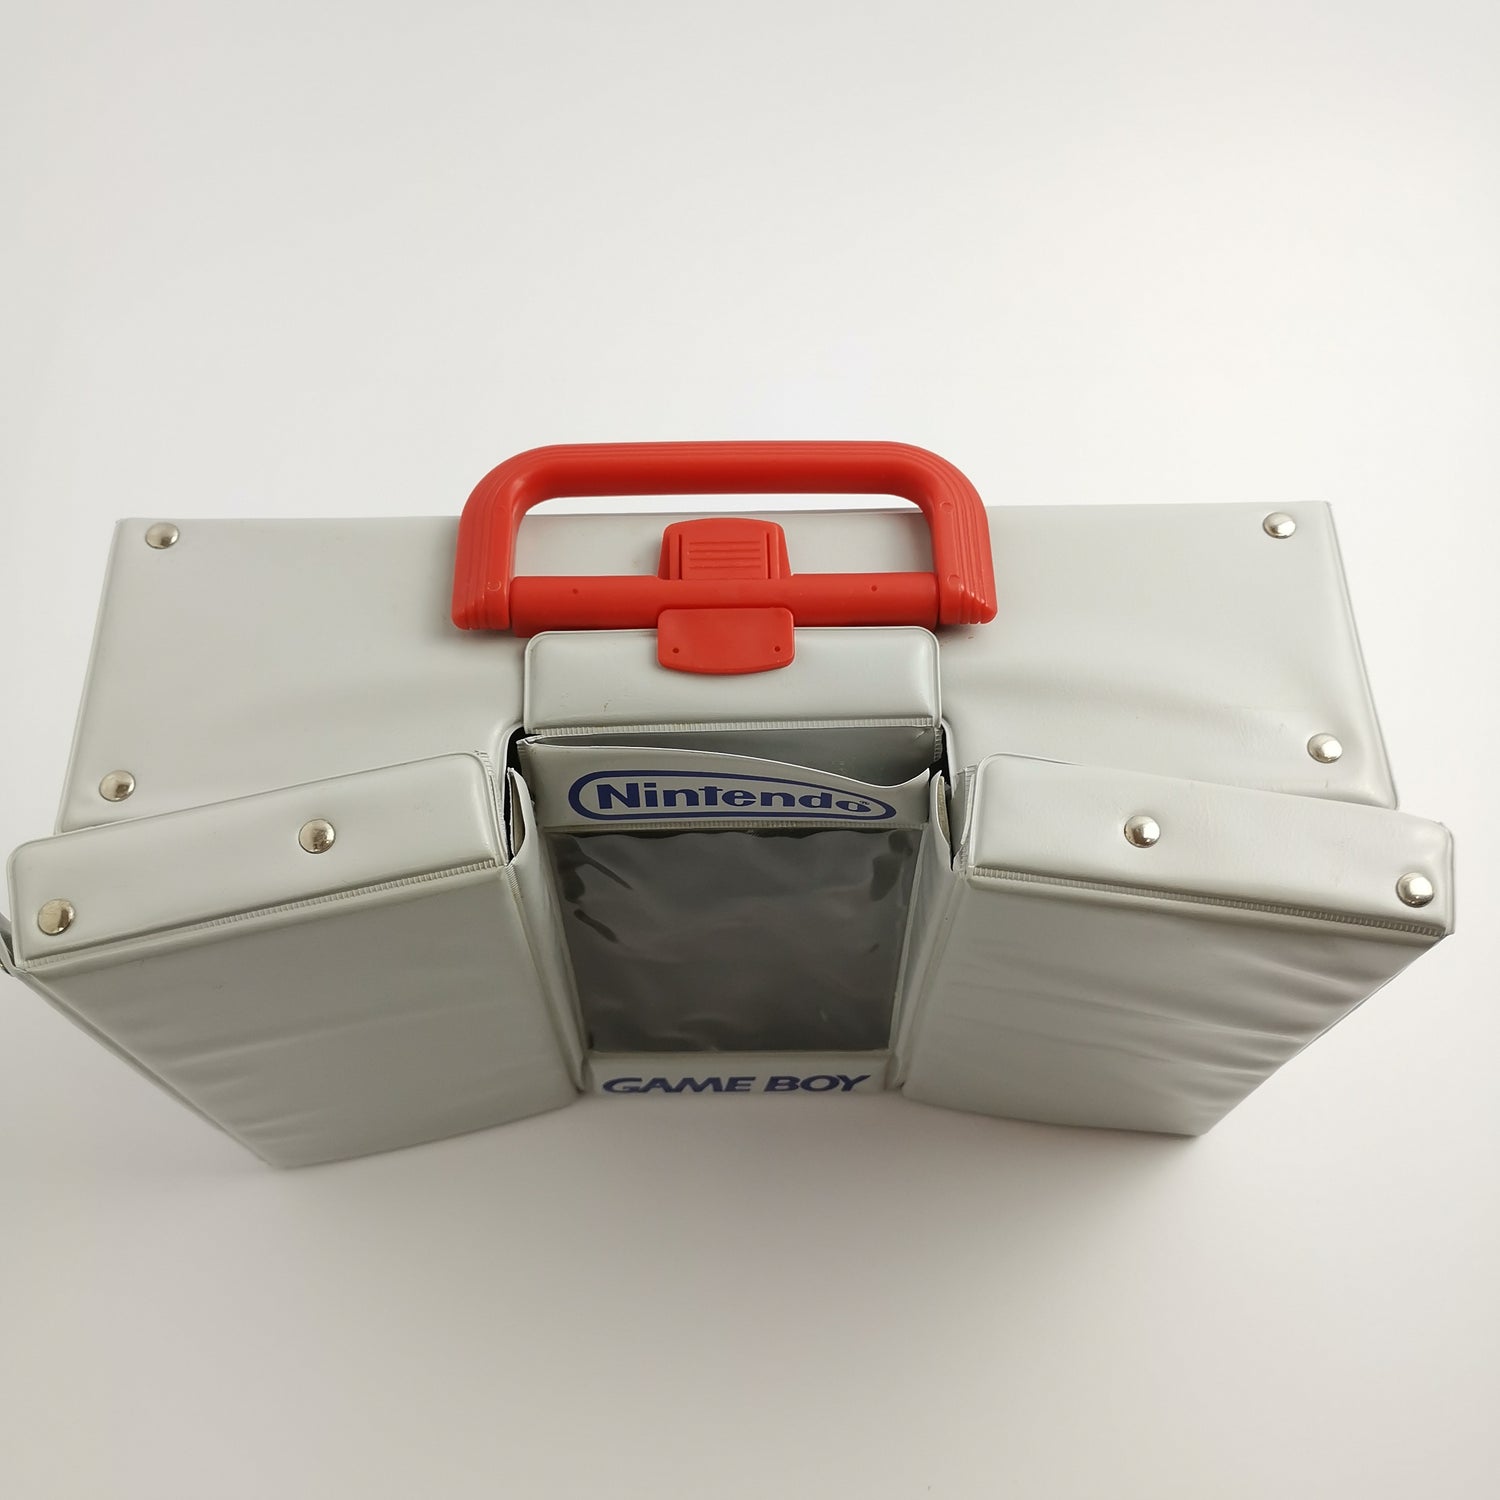 Nintendo Gameboy Classic - Storage Case Box | GB Game Boy PAL